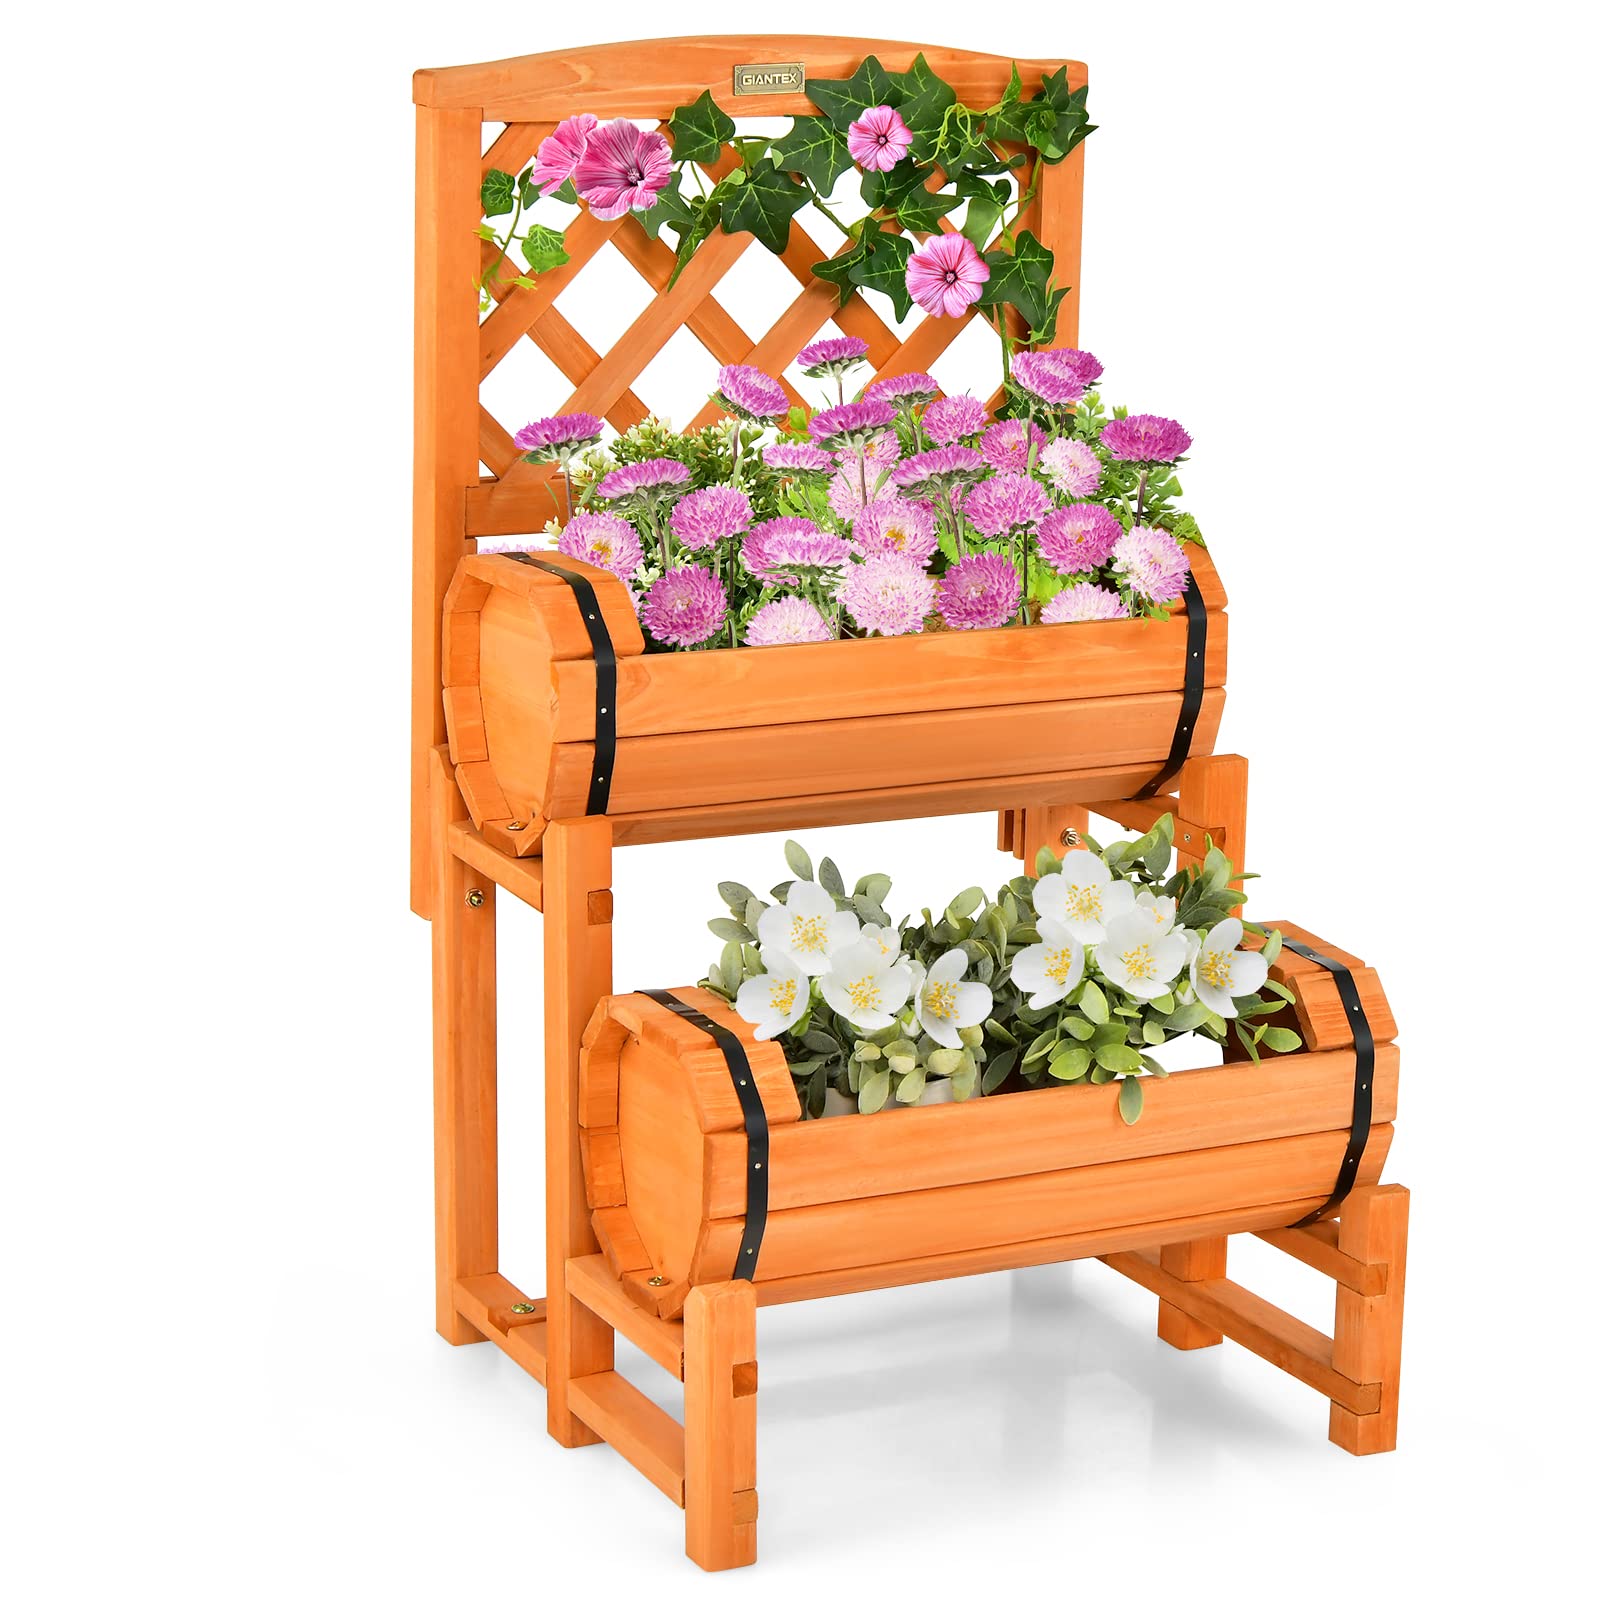 Giantex Raised Garden Bed with 2 Barrel Planters & Trellis, 2-Tier Freestanding Wooden Raised Bed for Vegetable Flower Fruit